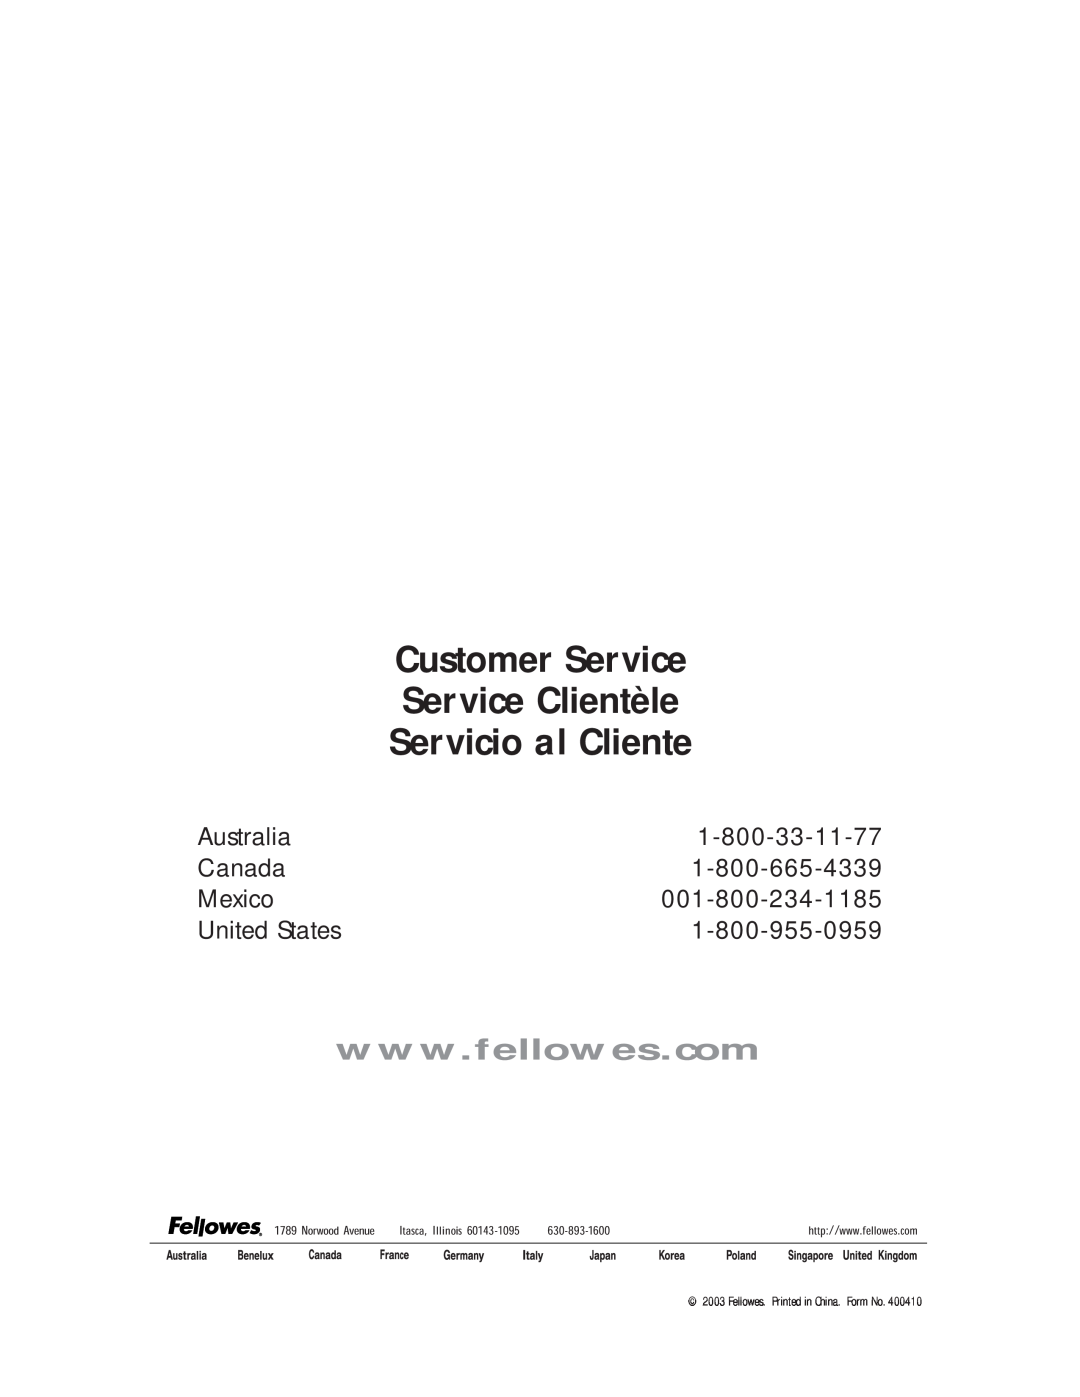 Fellowes DM8C manual Customer Service, Service Clientèle, Servicio al Cliente, Australia, 1-800-33-11-77, Canada, Mexico 